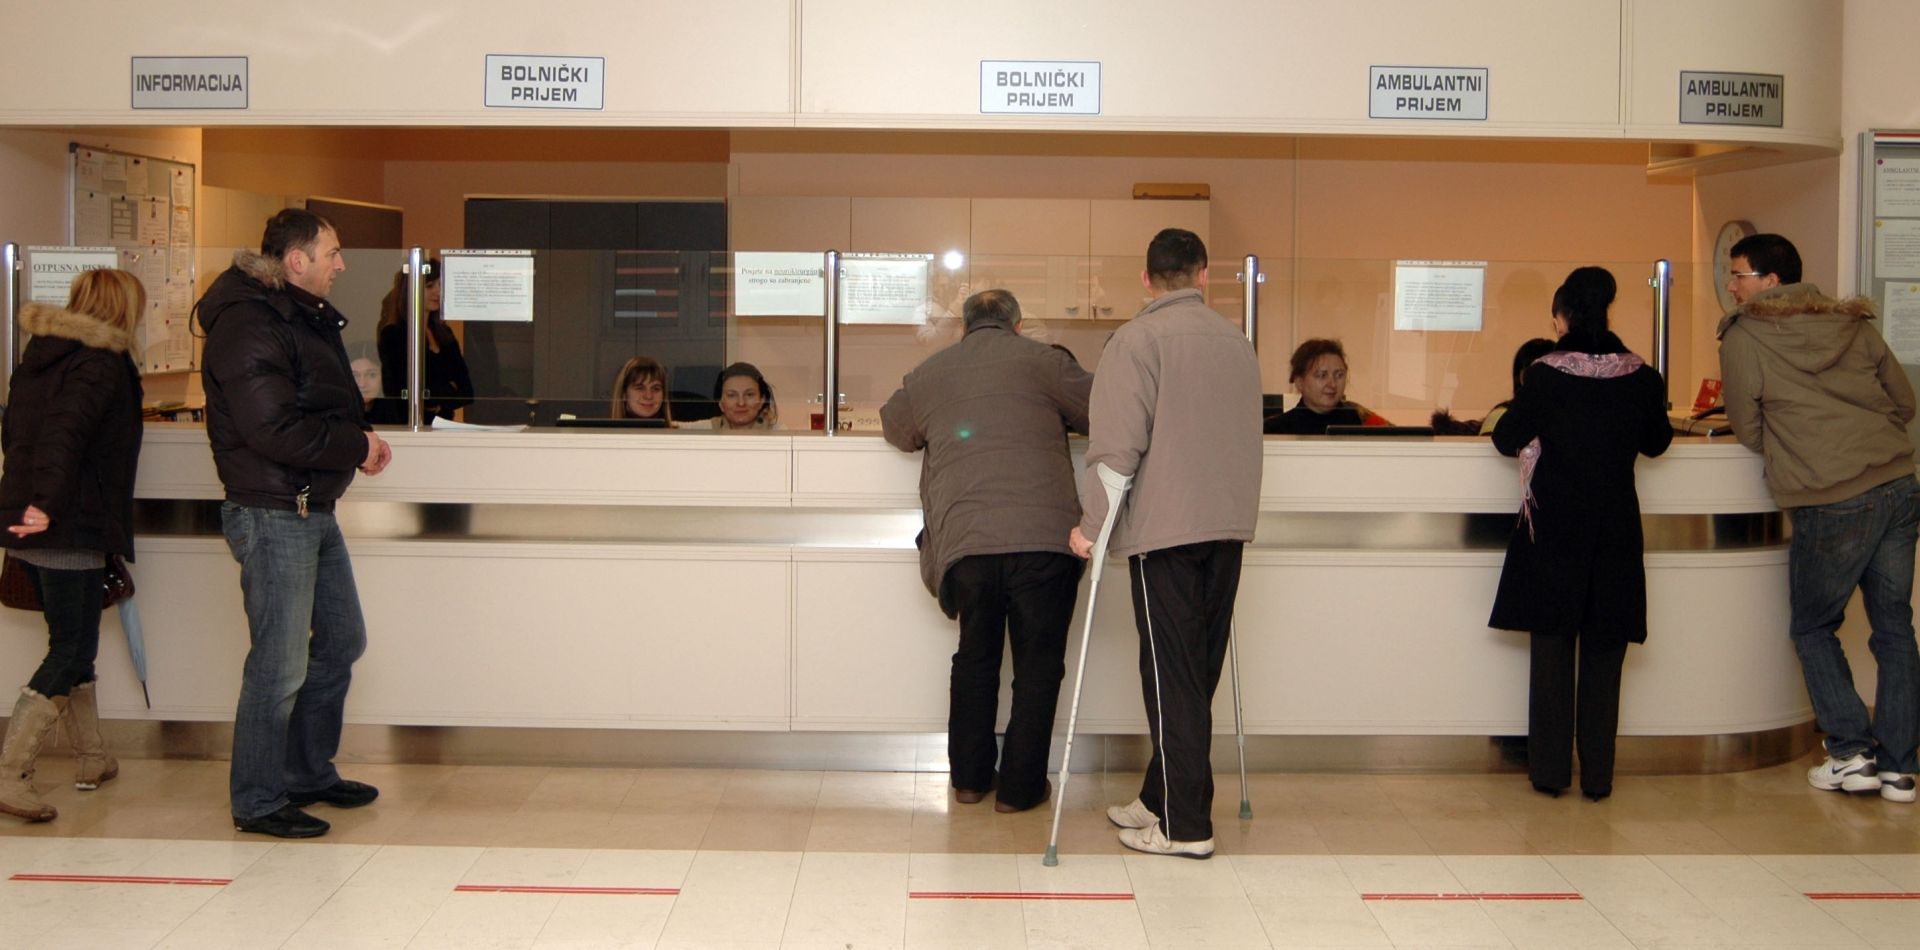 27.01.2010., Mostar - Sveucilisna klinicka bolnica Mostar. 
Photo: Braco Selimovic/VLM/PIXSELL